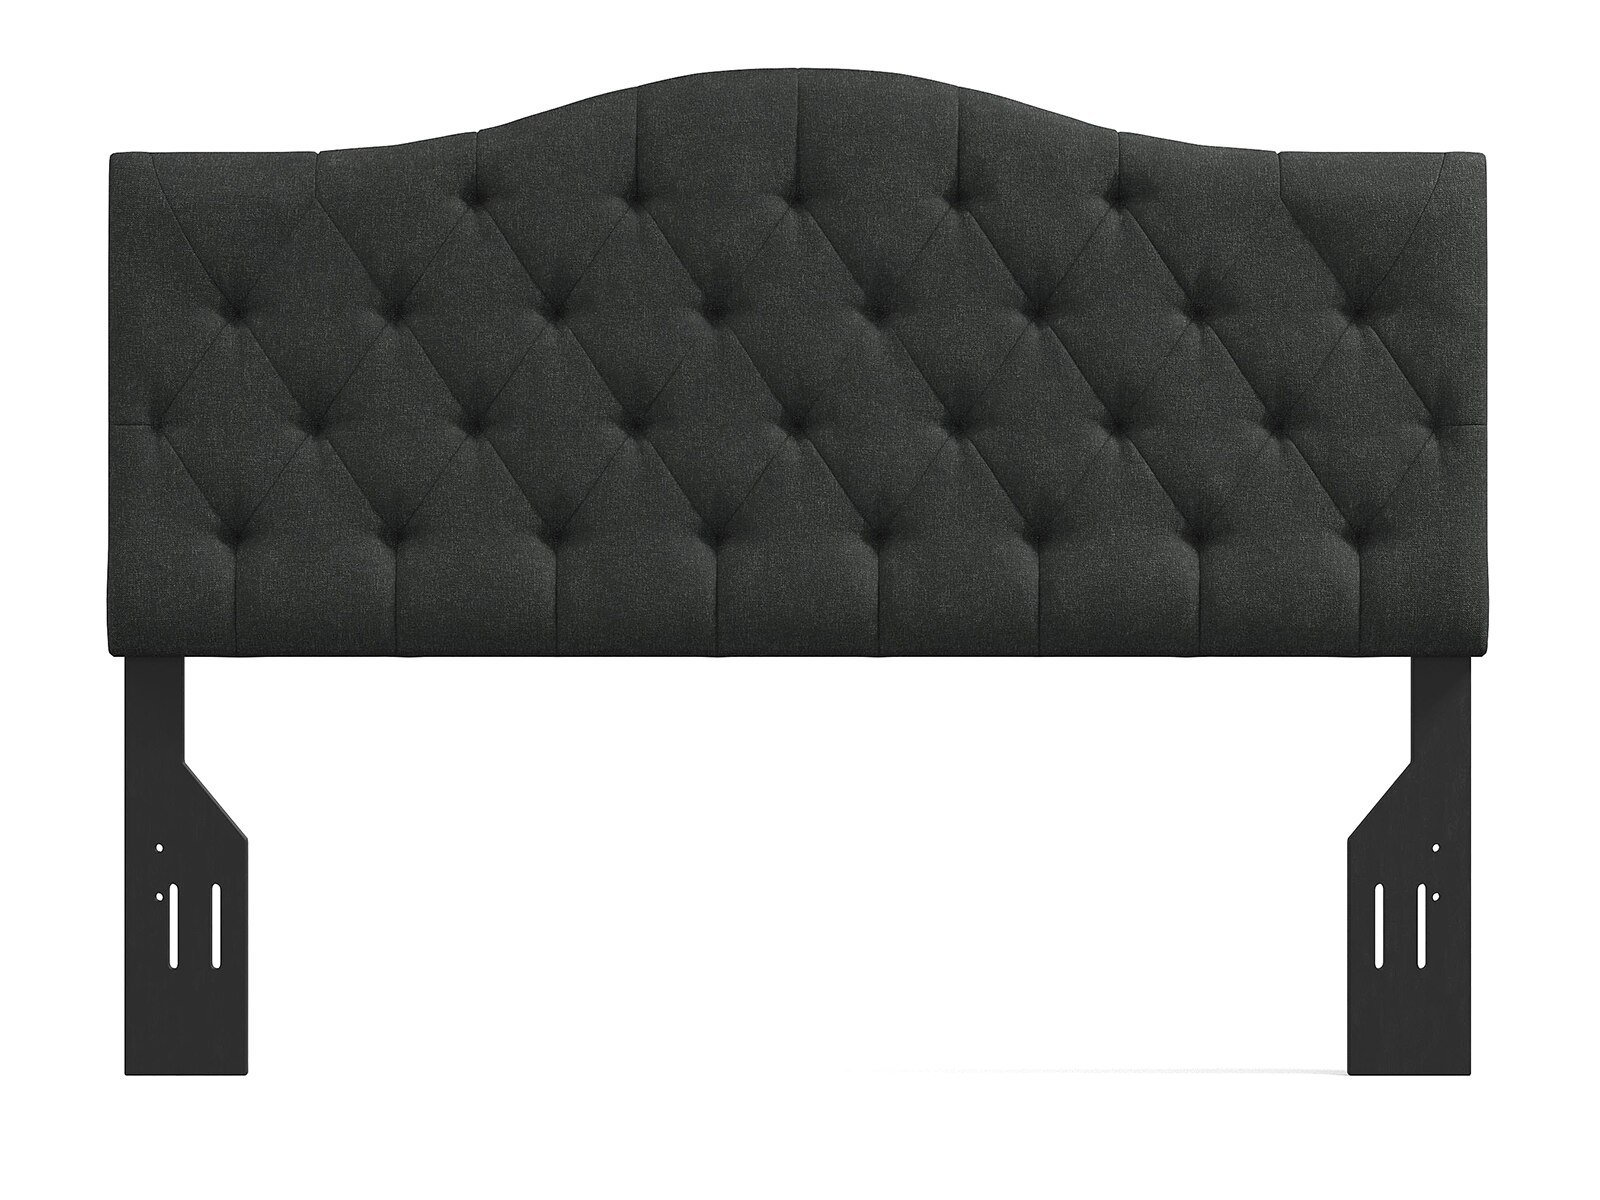 Oros Tufted Camelback Upholstered Headboard